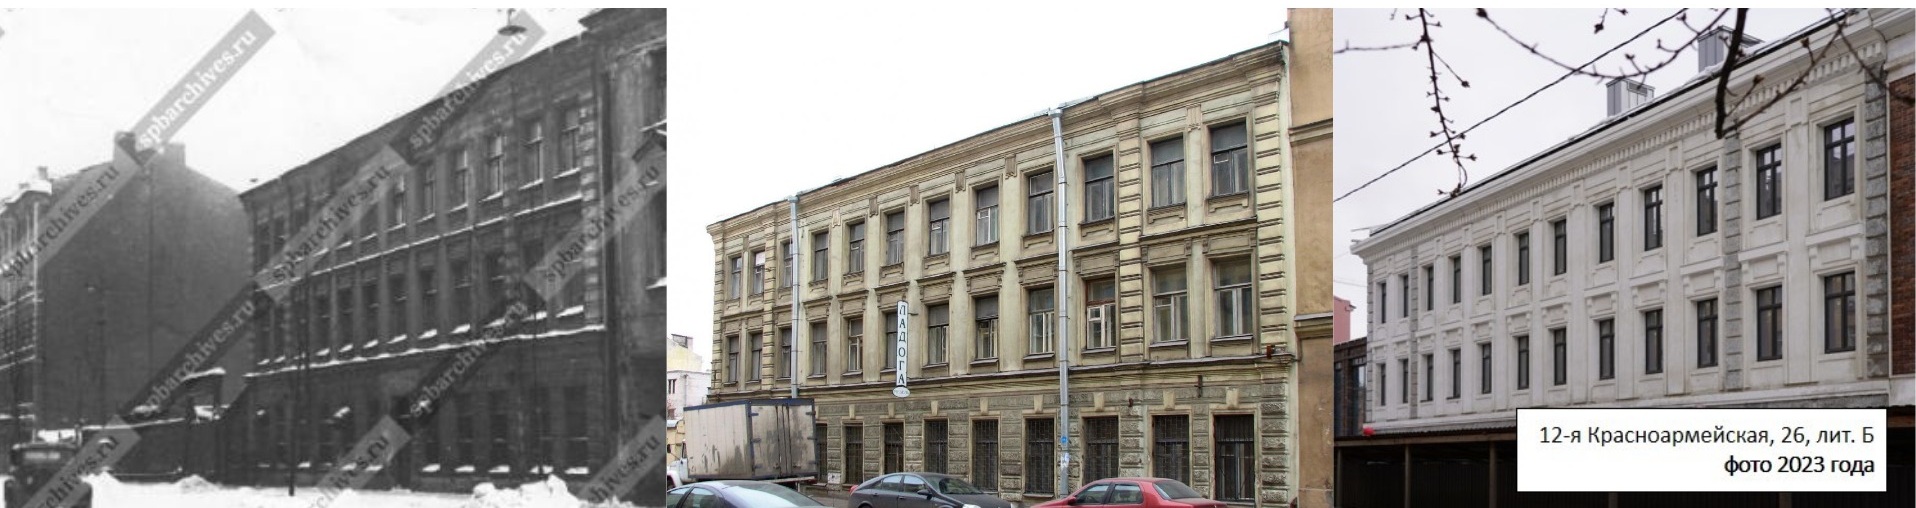 жилой дом фабрики Тарасова 1948, 2009, 2023.jpg